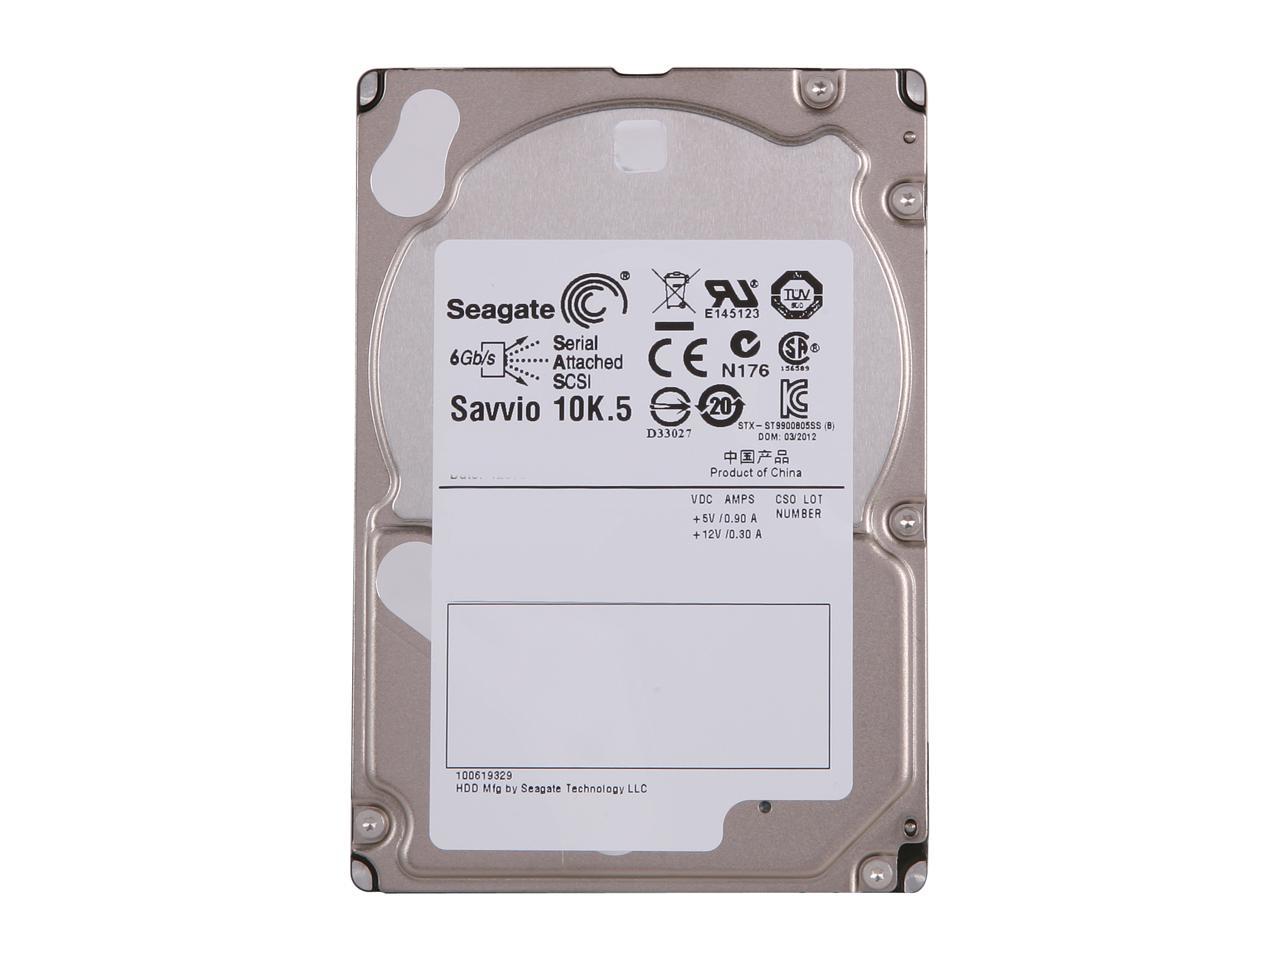 Seagate Savvio 10K.5 ST9300605SS 300GB 10000 RPM 64MB Cache SAS 6Gb/s 2.5